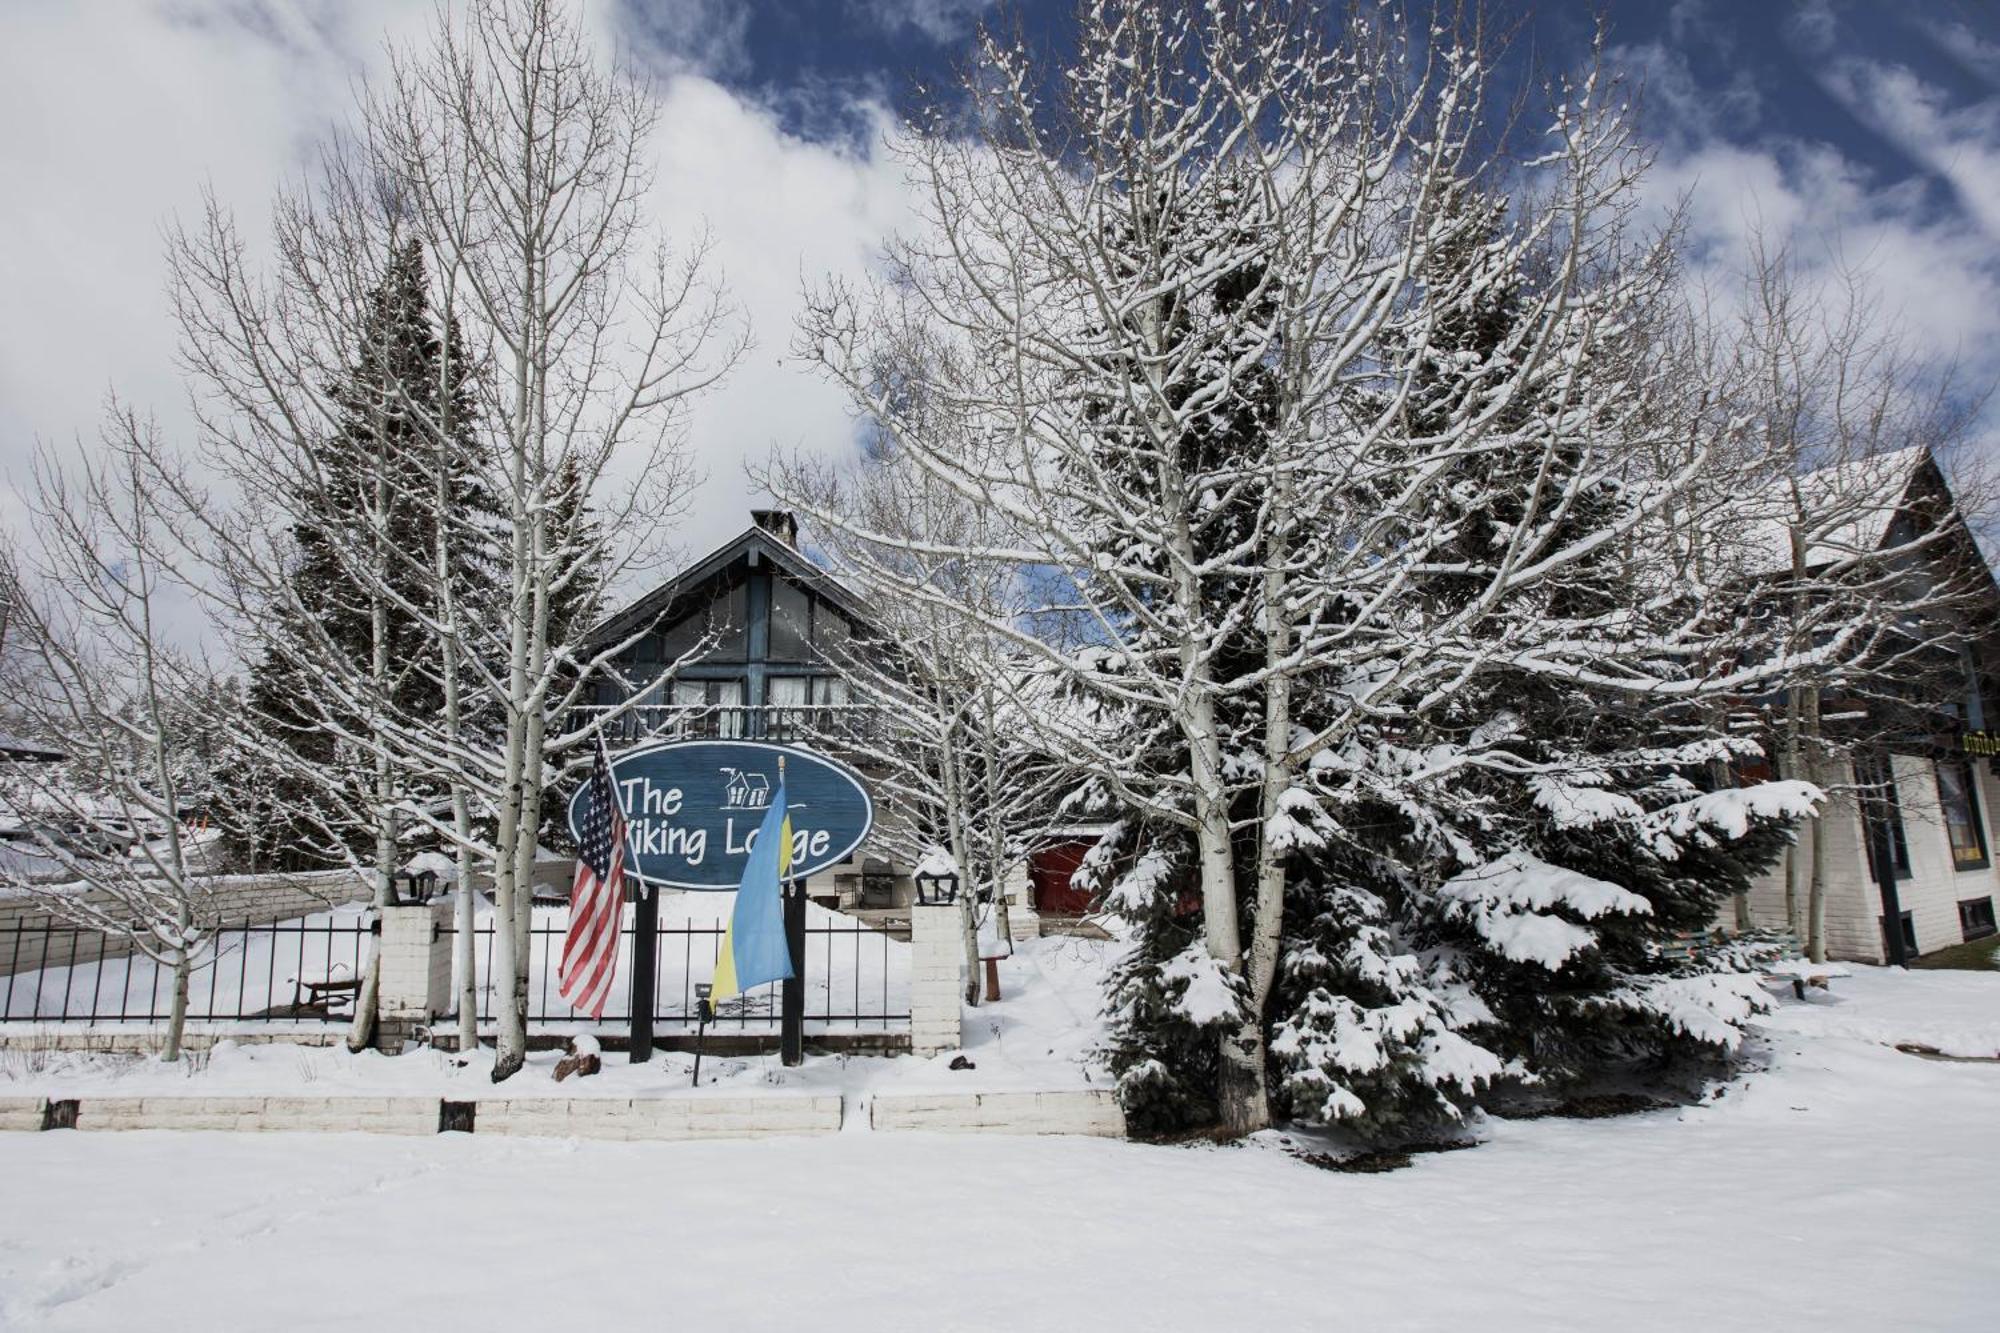 The Viking Lodge - Downtown Winter Park Colorado Buitenkant foto